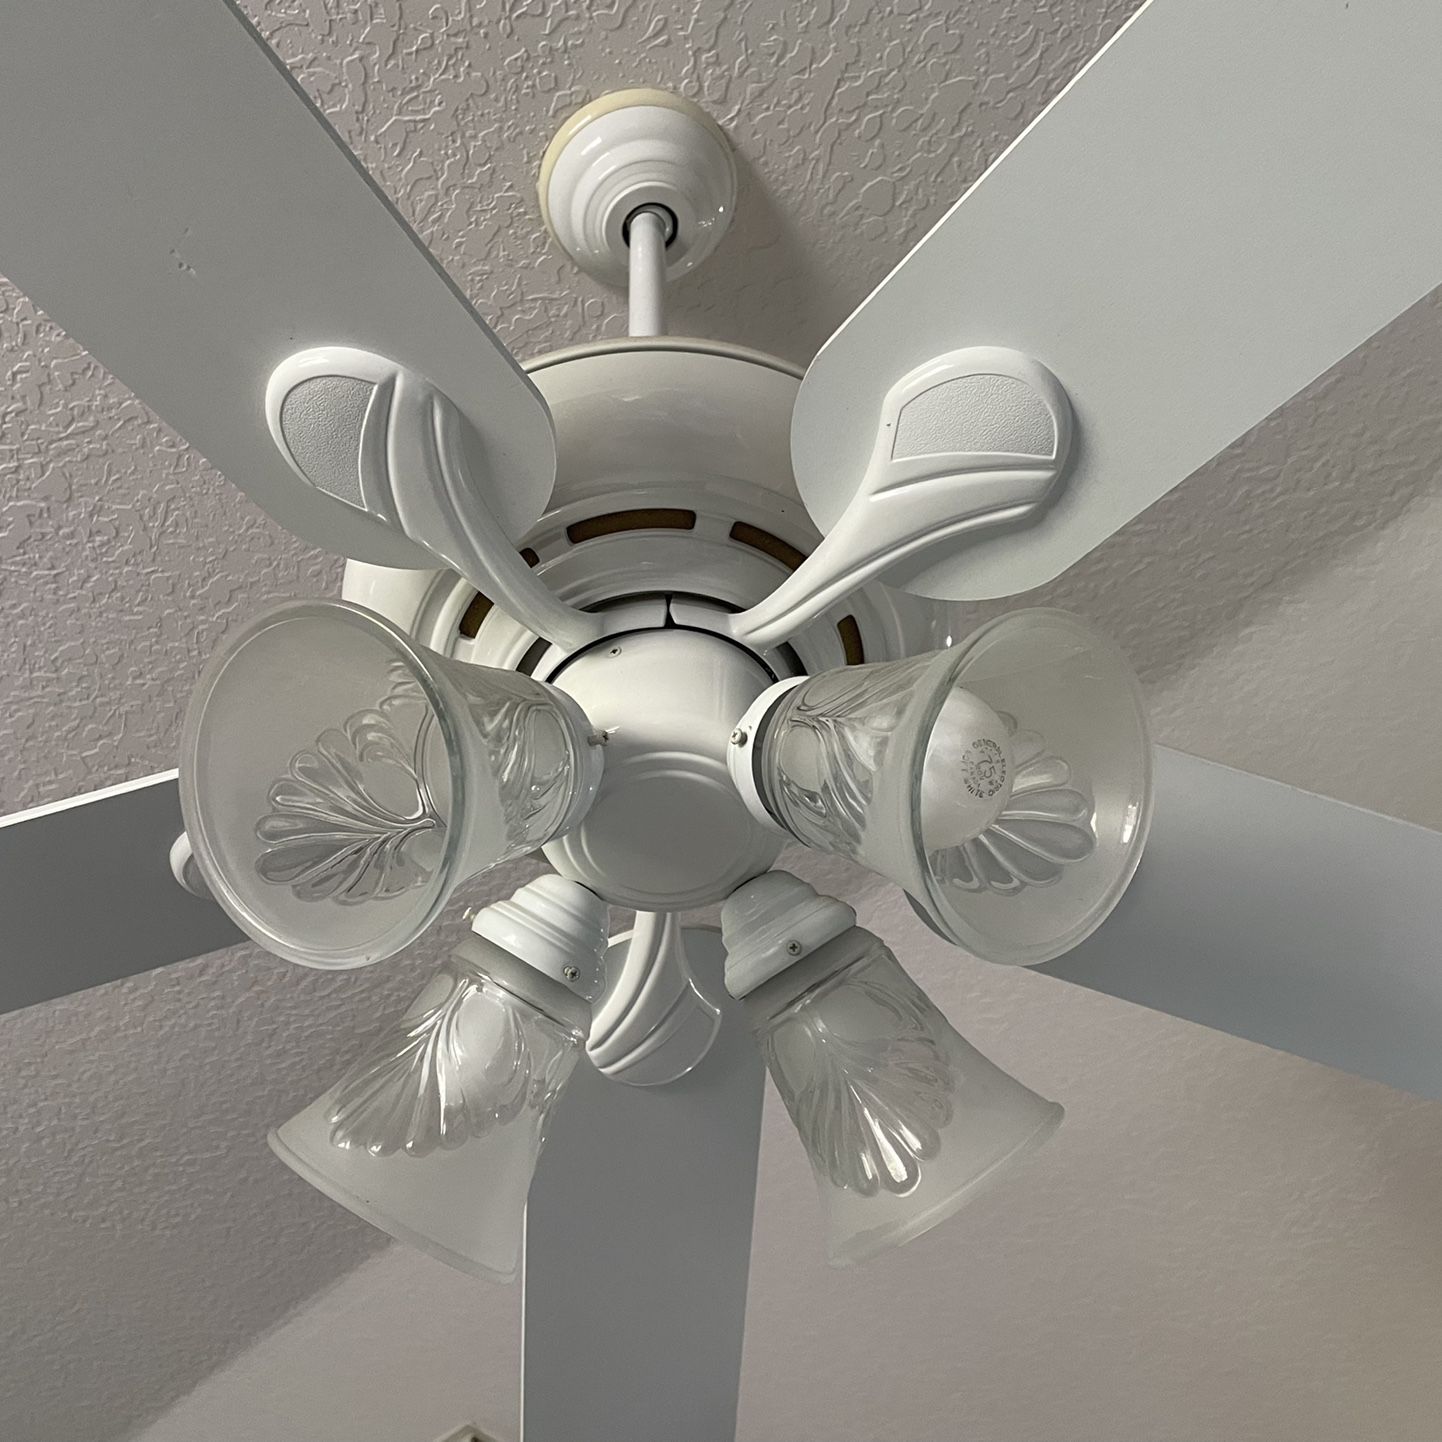 How To Change A Hampton Bay Ceiling Fan Light Bulb